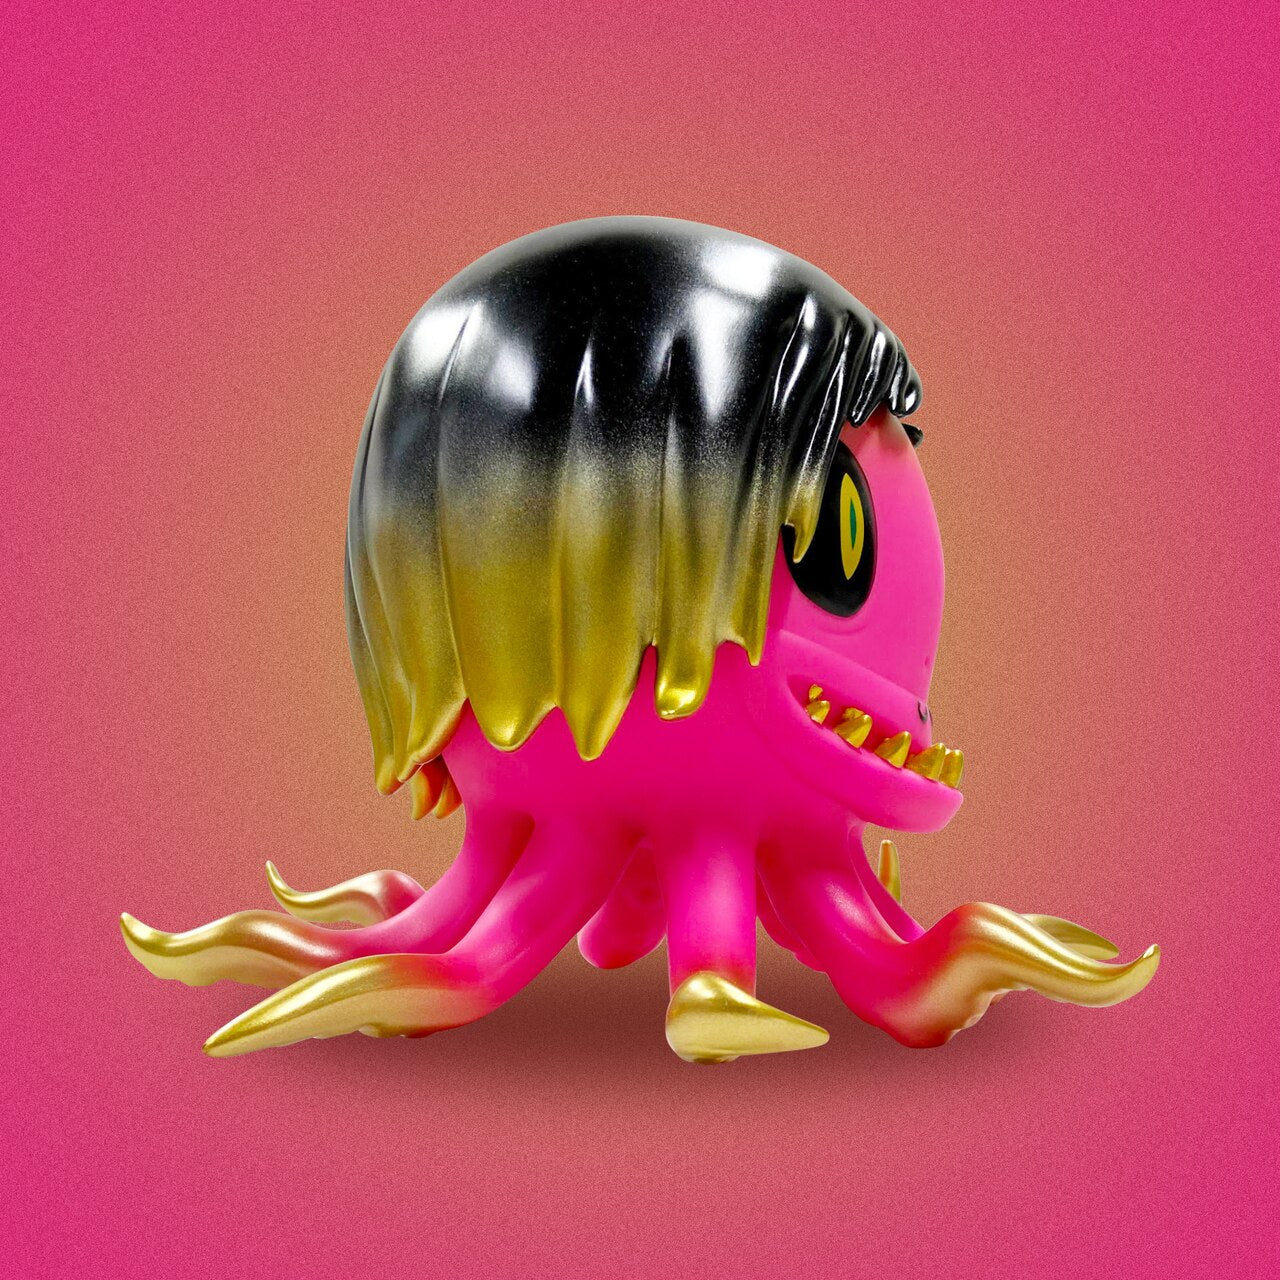 Nathan Jurevicius - Blister the Octopus Pink Vinyl Figure